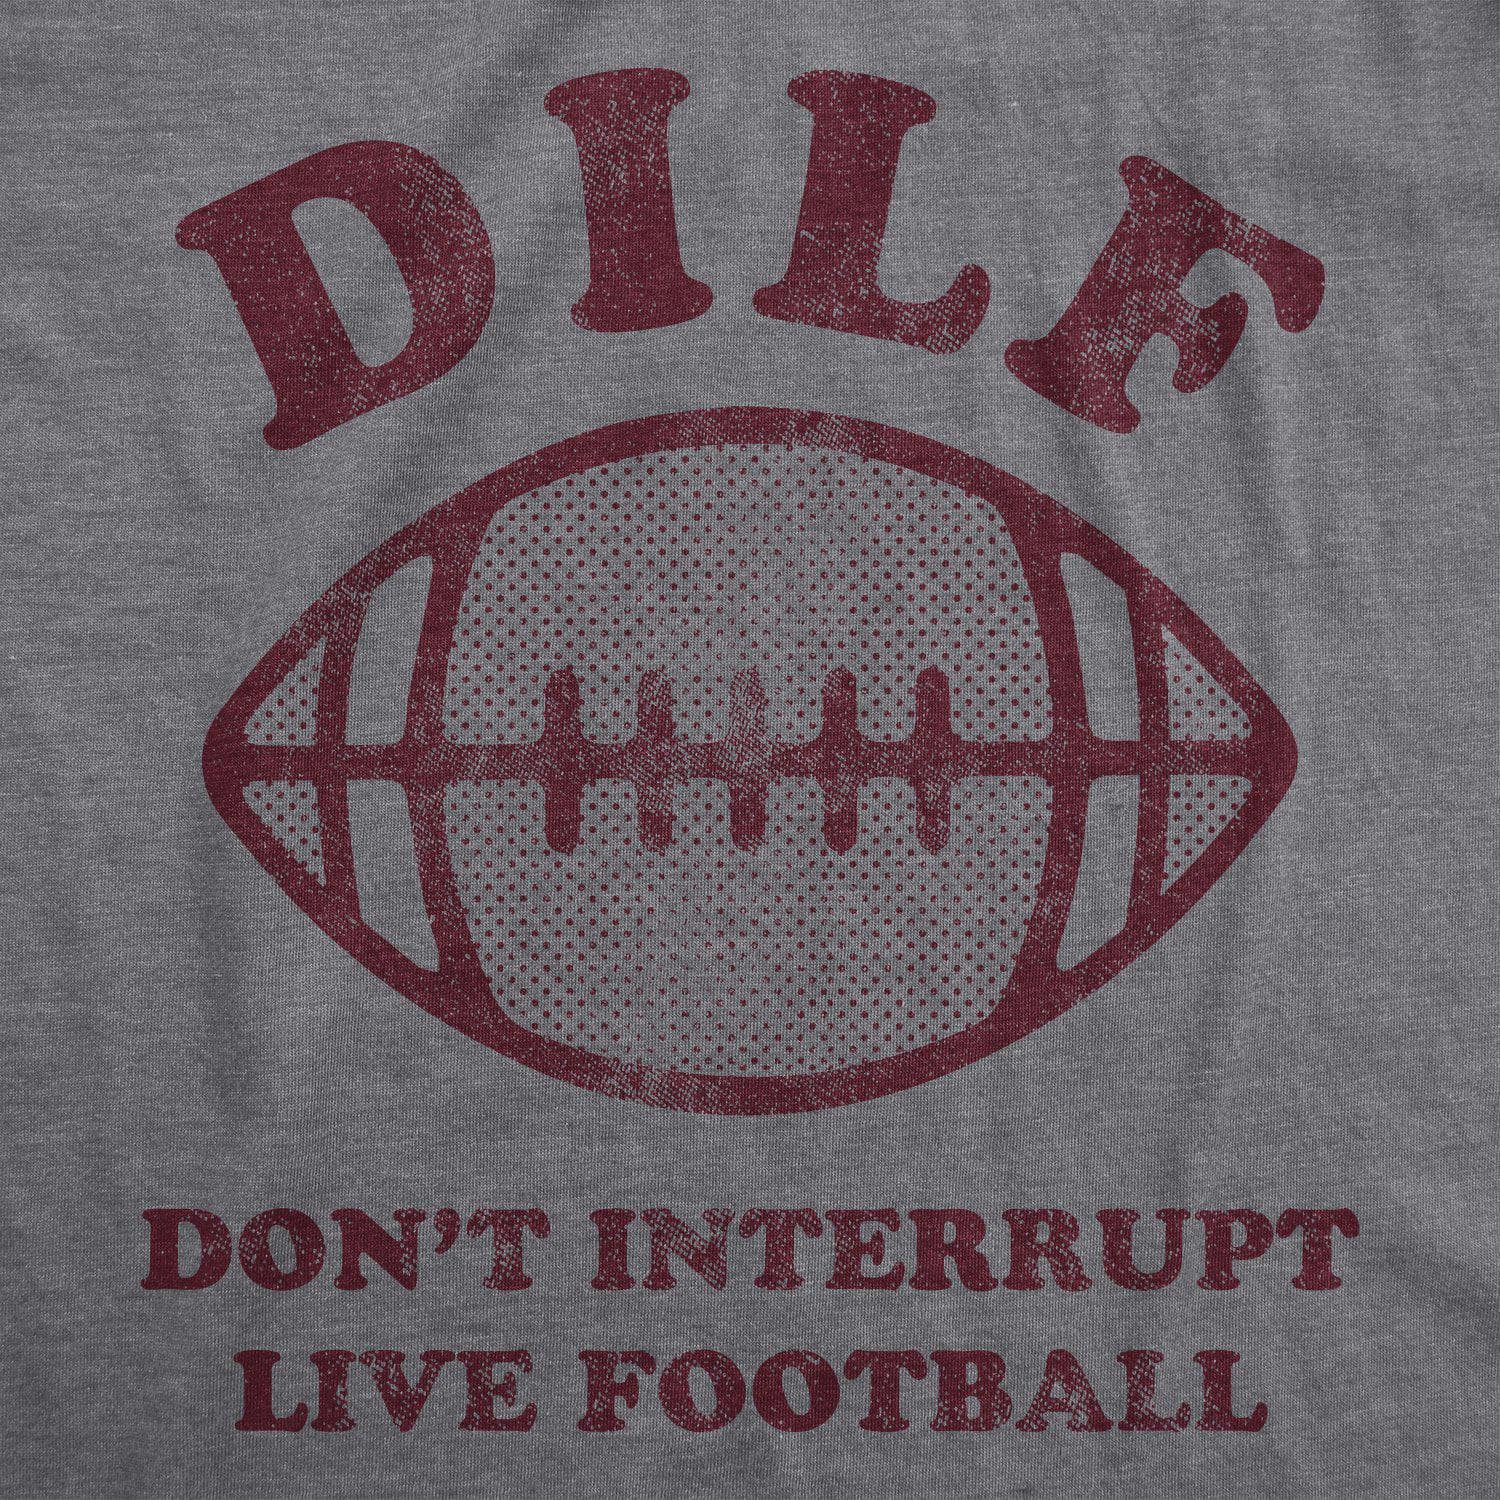 DILF Don't Interrupt Live Football Men's Tshirt - Crazy Dog T-Shirts